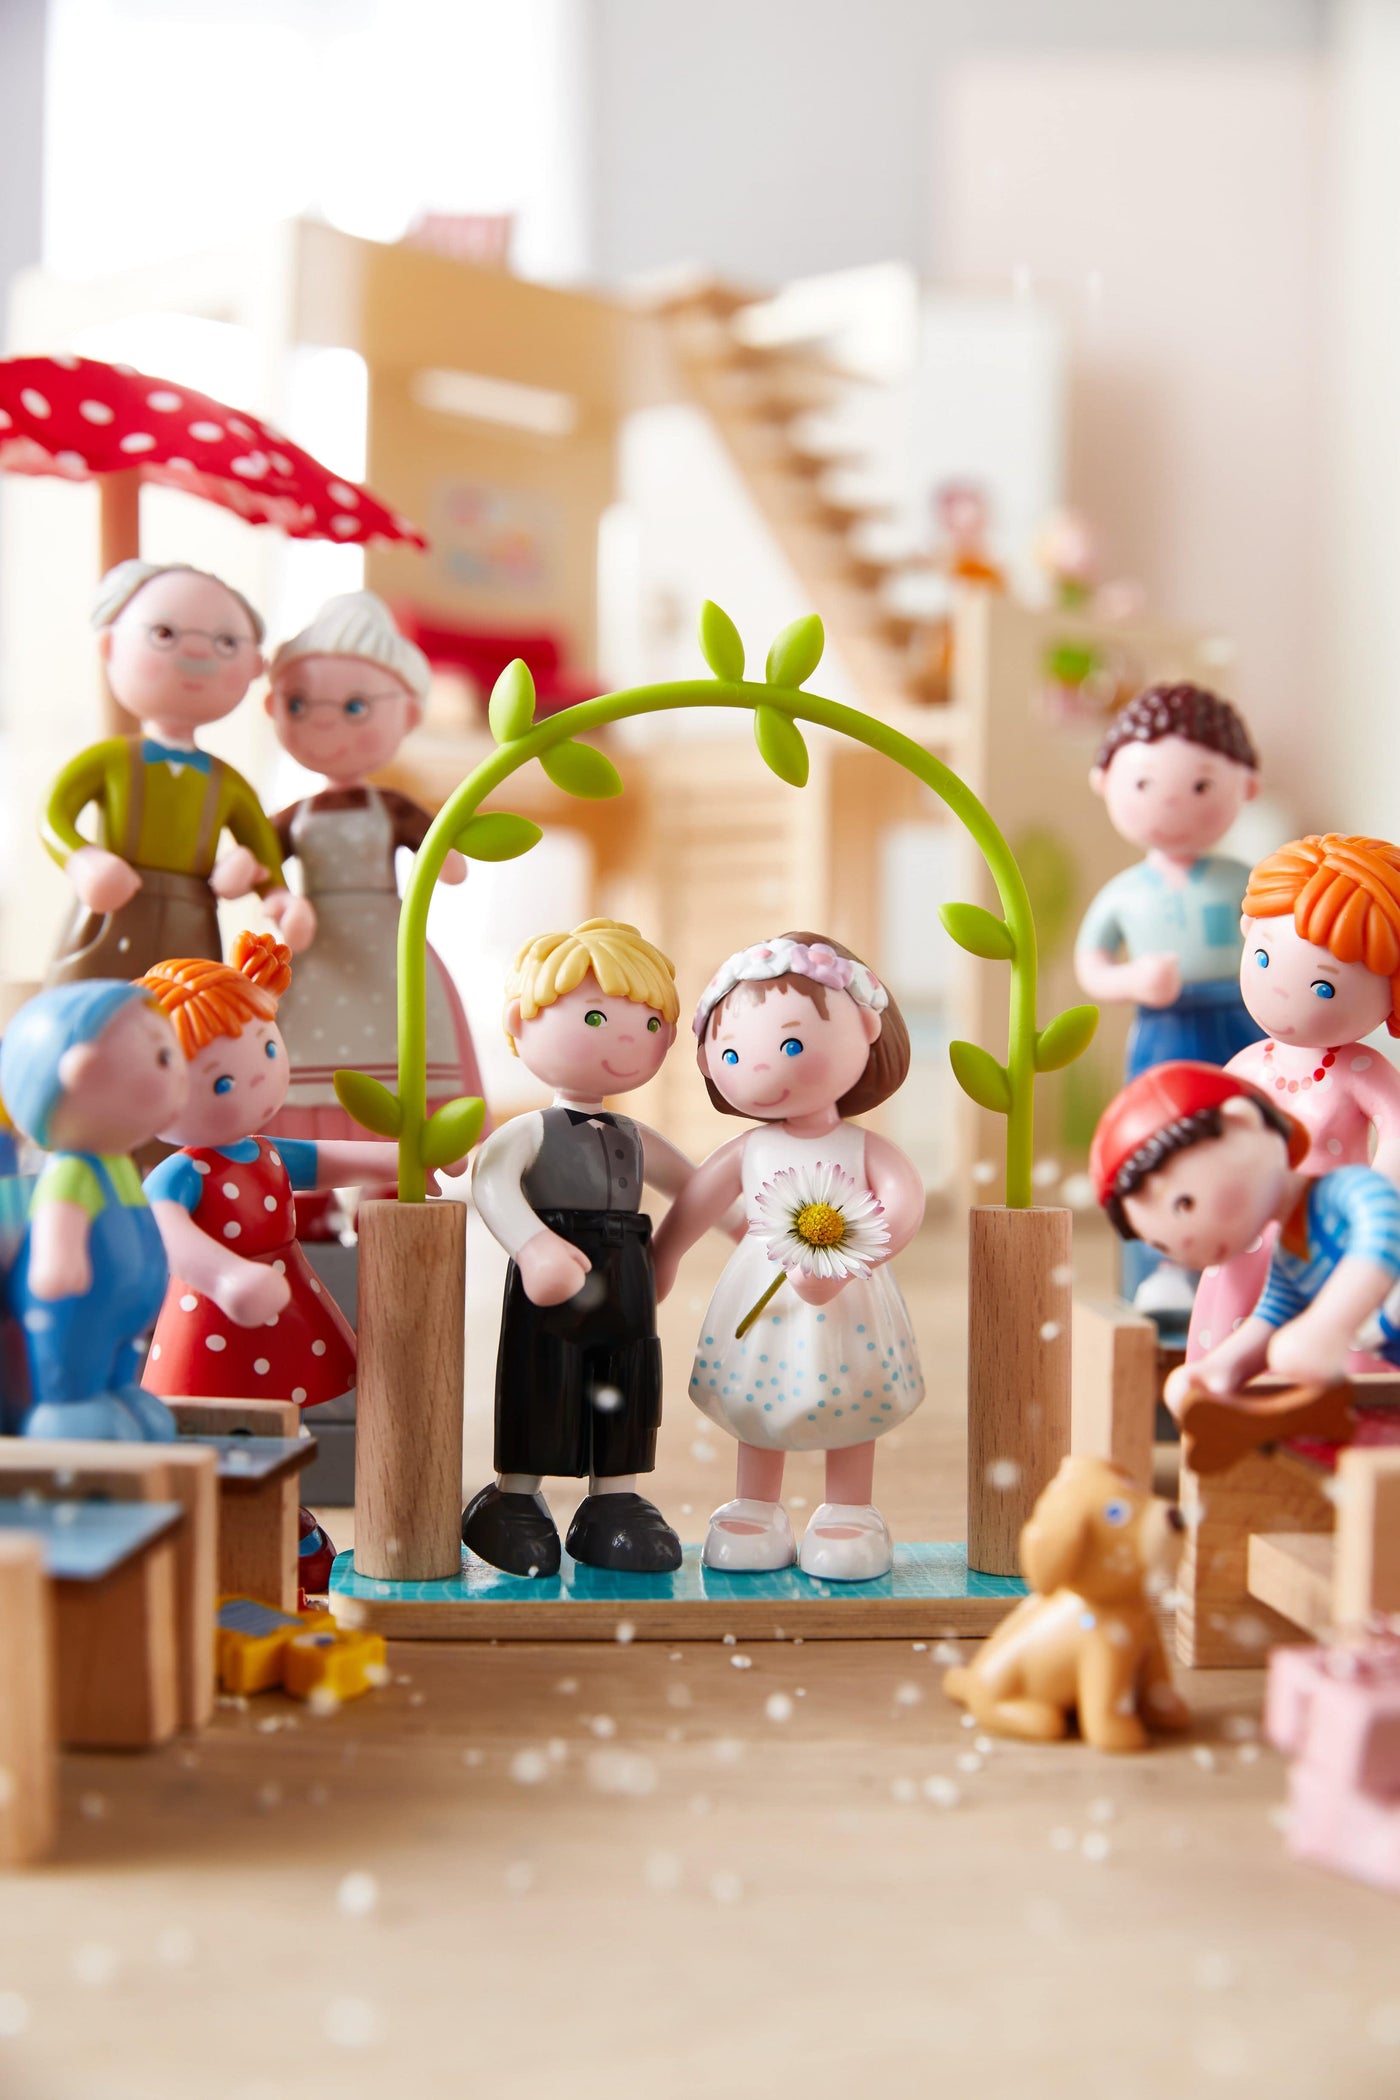 Little Friends Bride & Groom Wedding Play Set - HABA USA